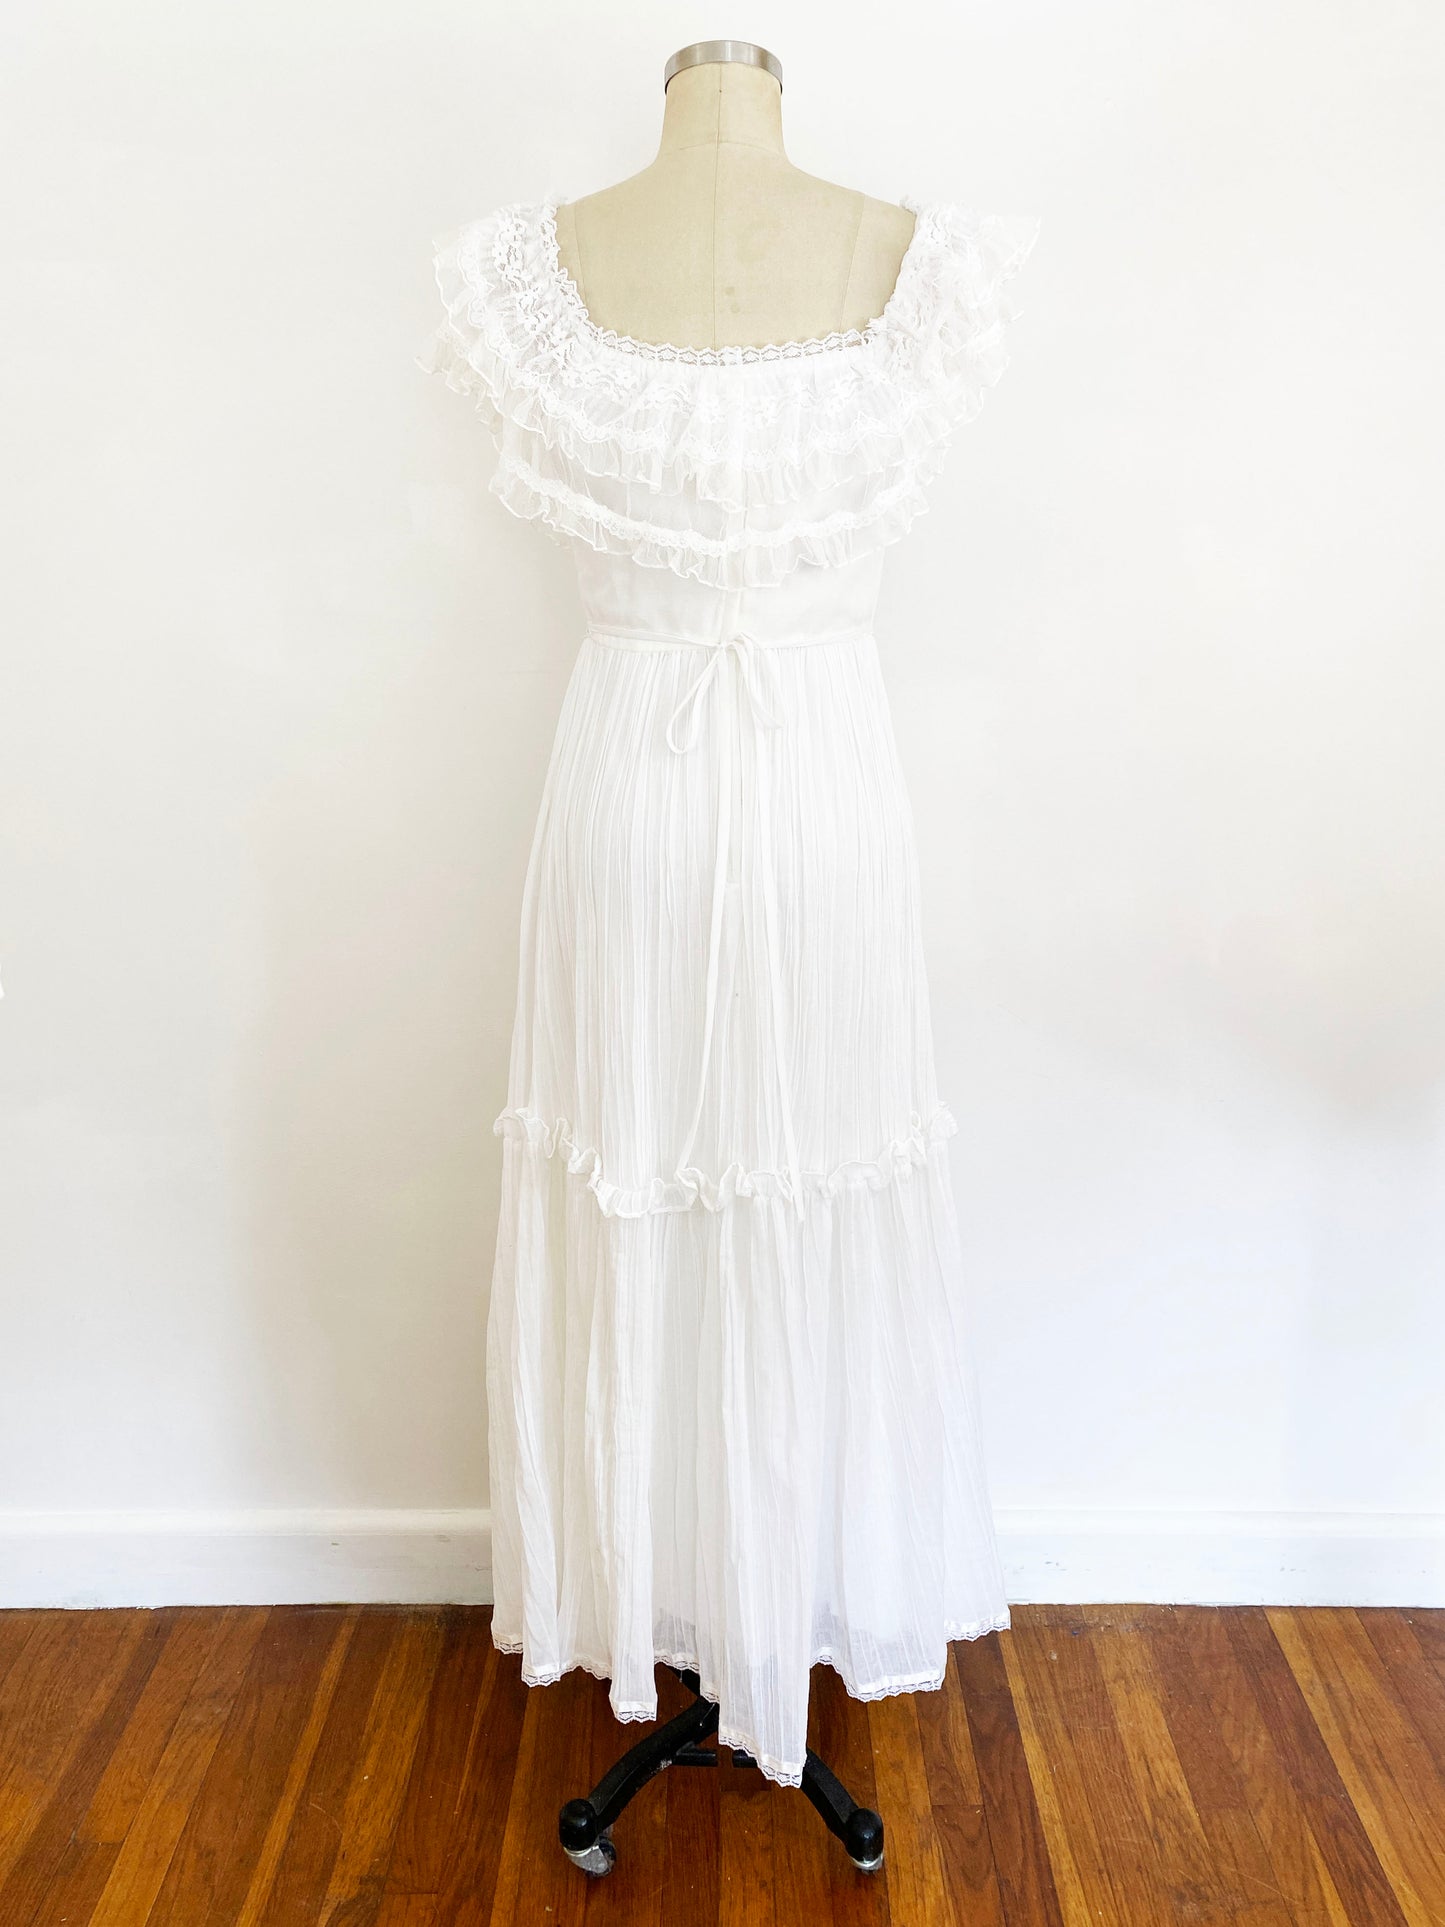 1970-1980s Gunne Sax White Gauzy Lace Dress Renaissance Prairie Maxi Dress Lace Ruffle Collar Boho Hippie Cottagecore Romantic / Small 4